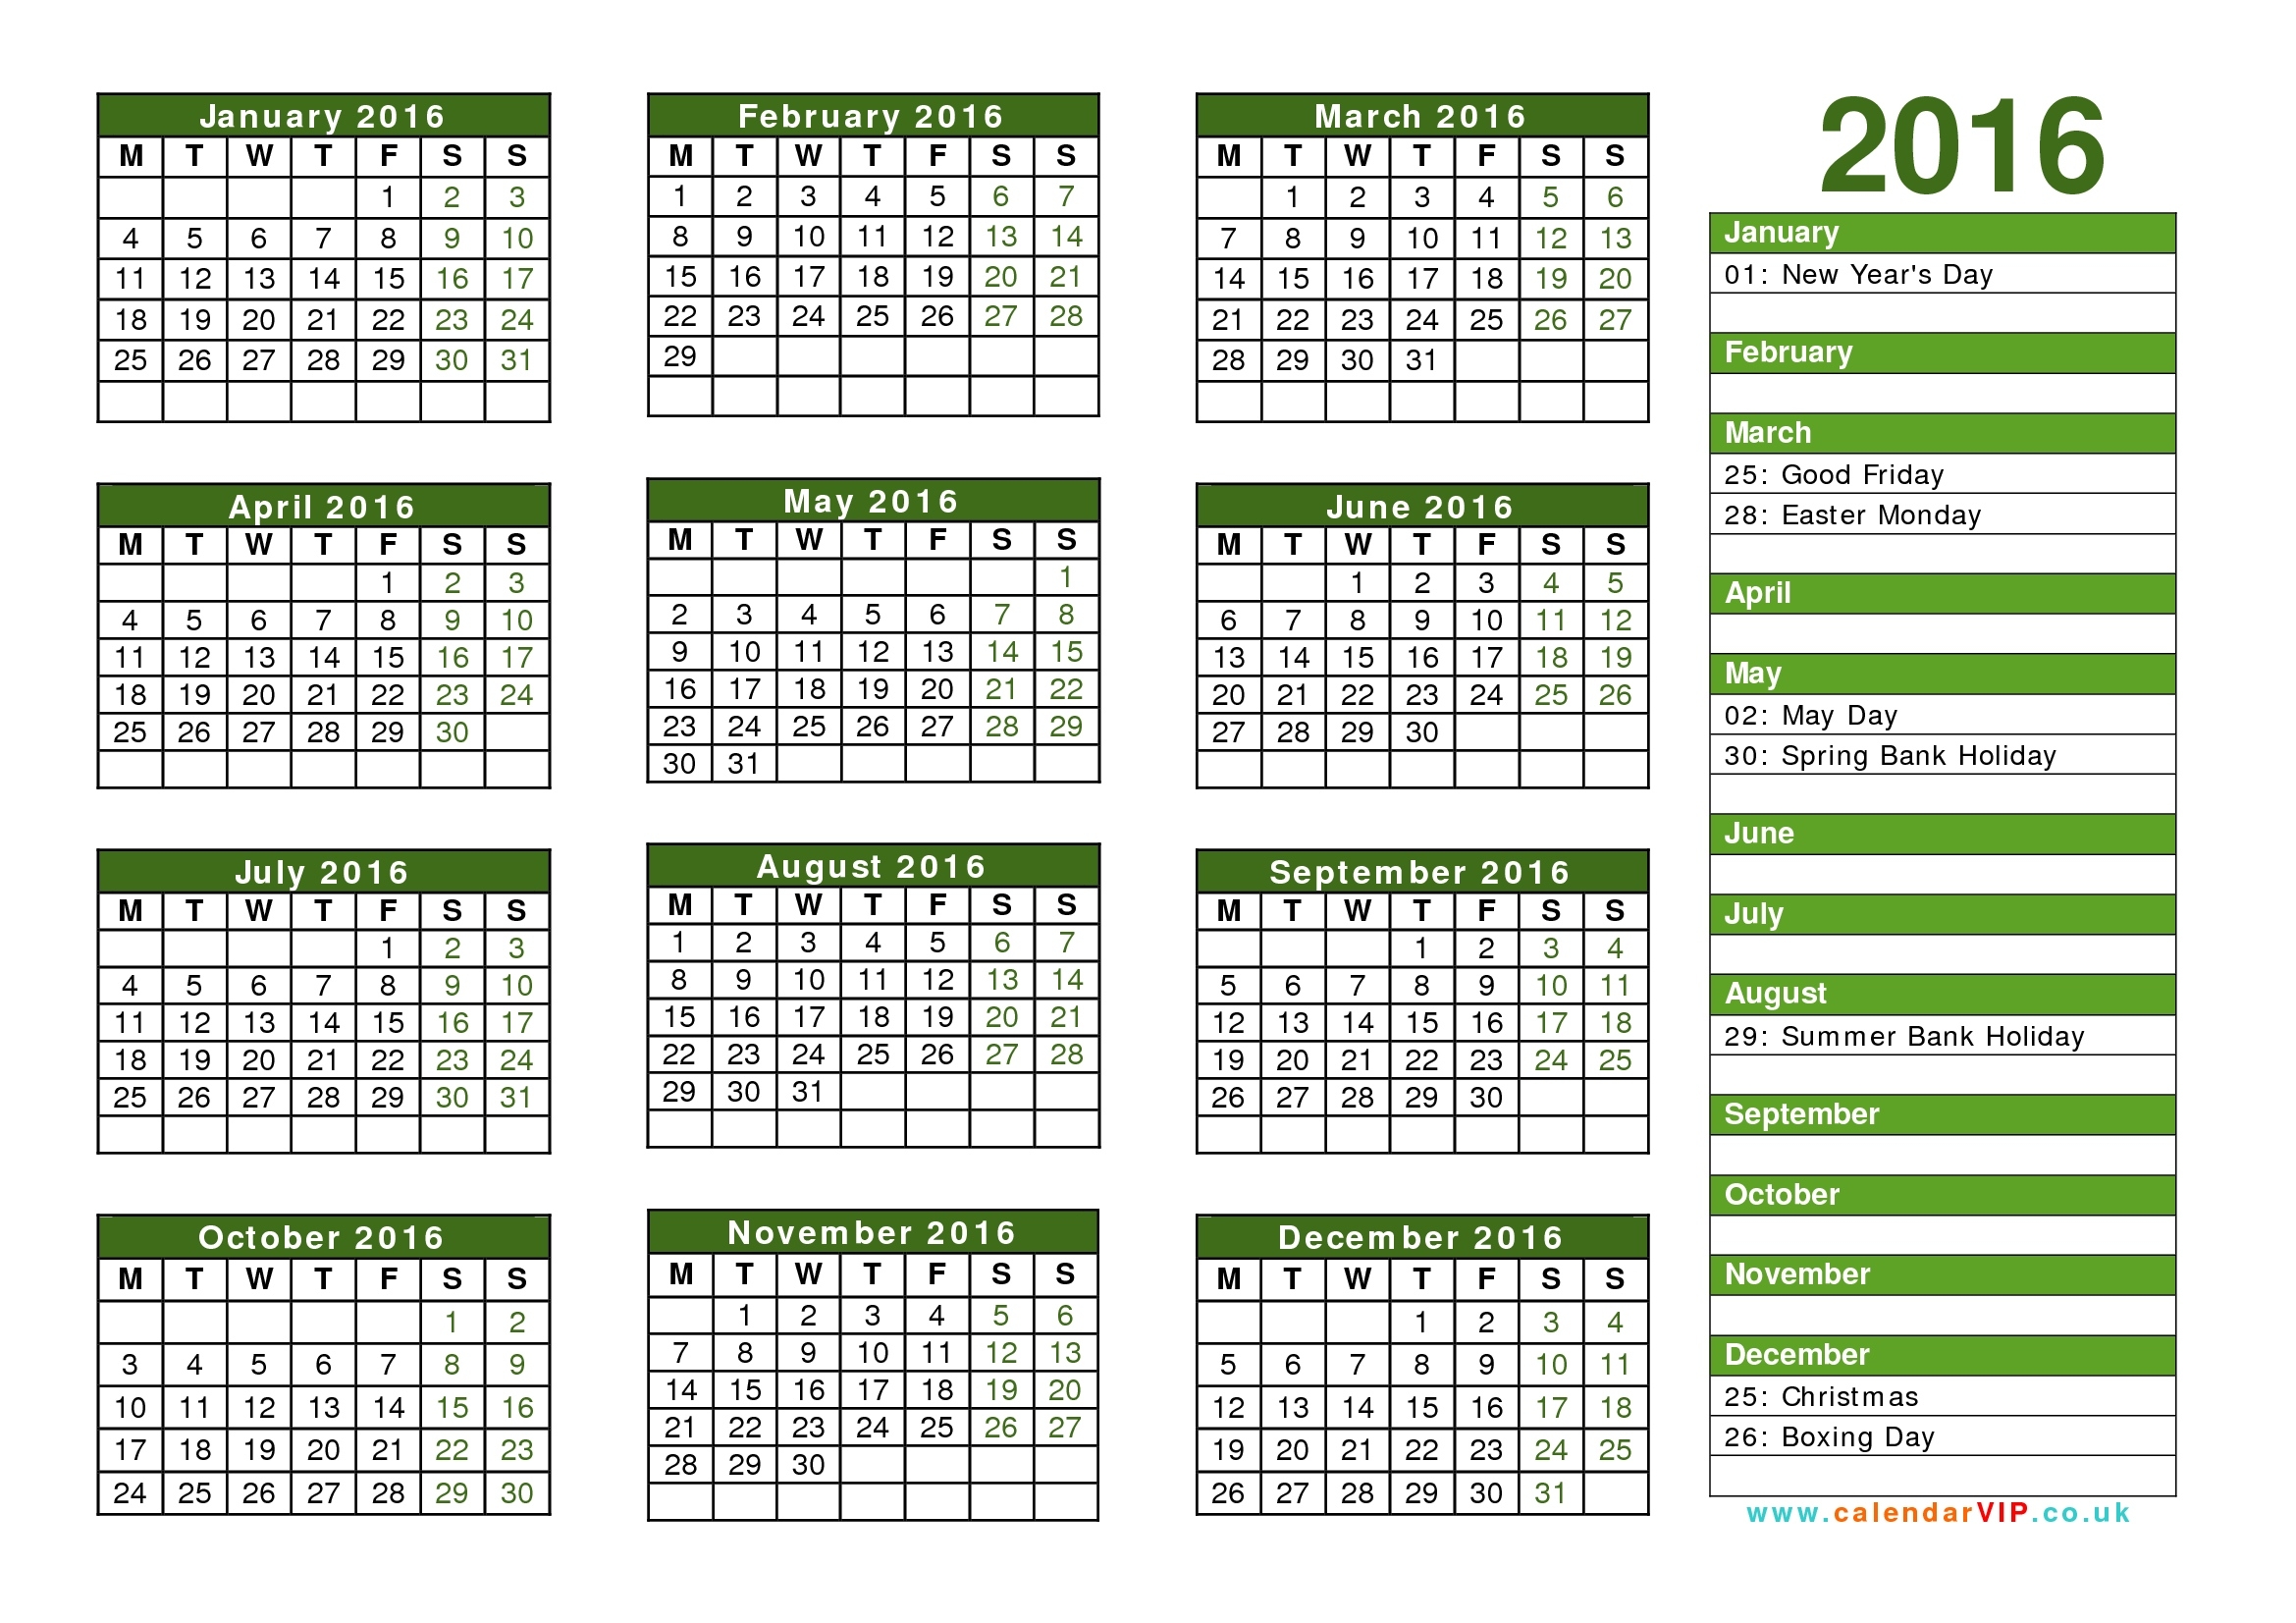 Calendar 2016 Uk - Free Yearly Calendar Templates For Uk Calendar Printing Online Uk